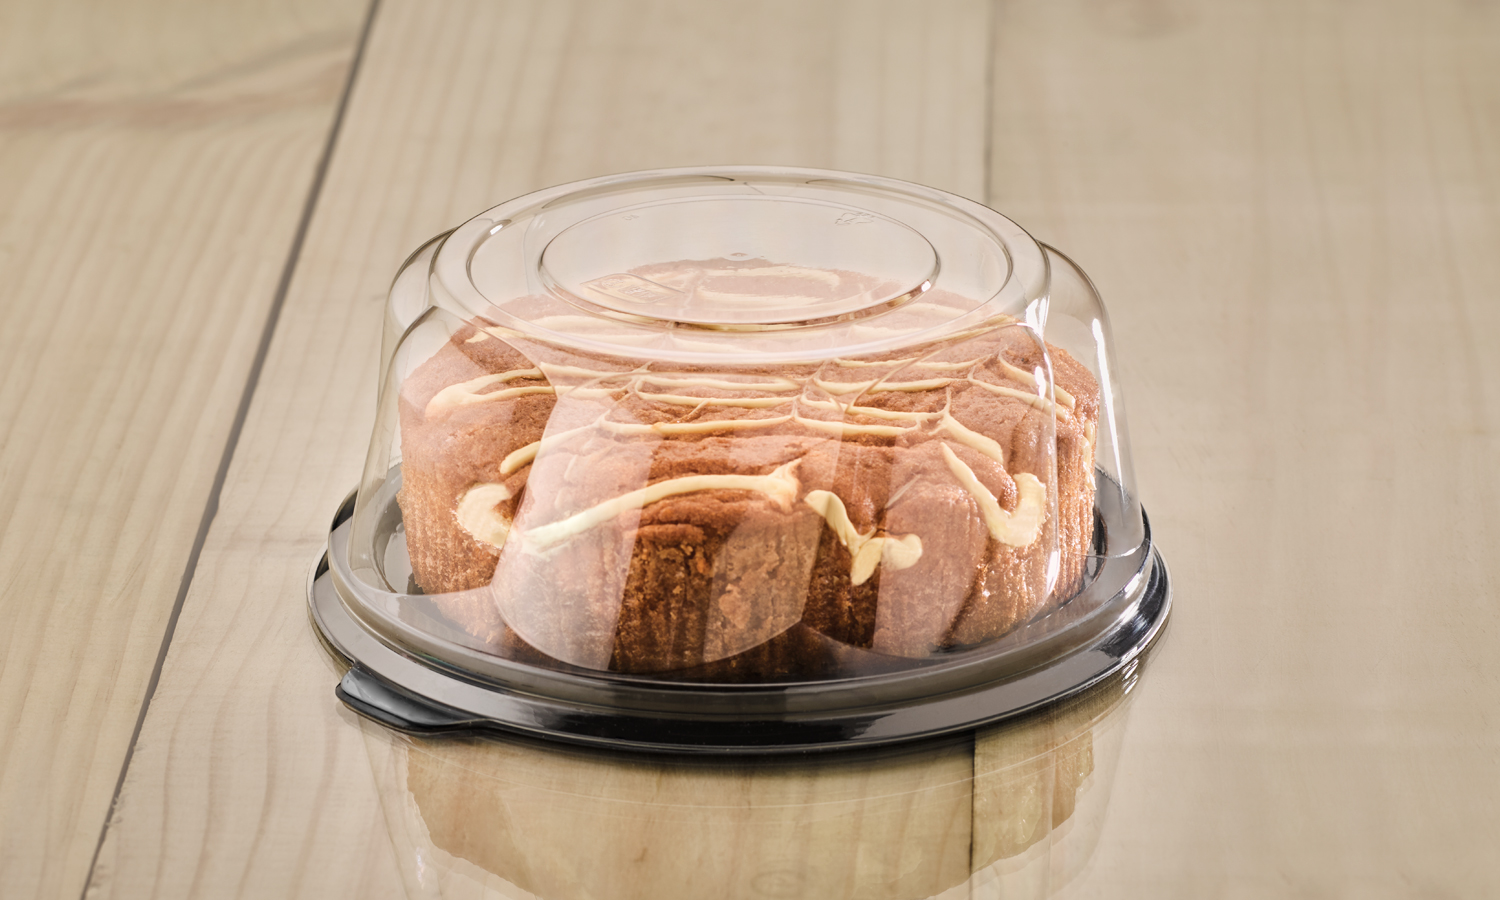 resq-reg-circular-visual-cake-domes